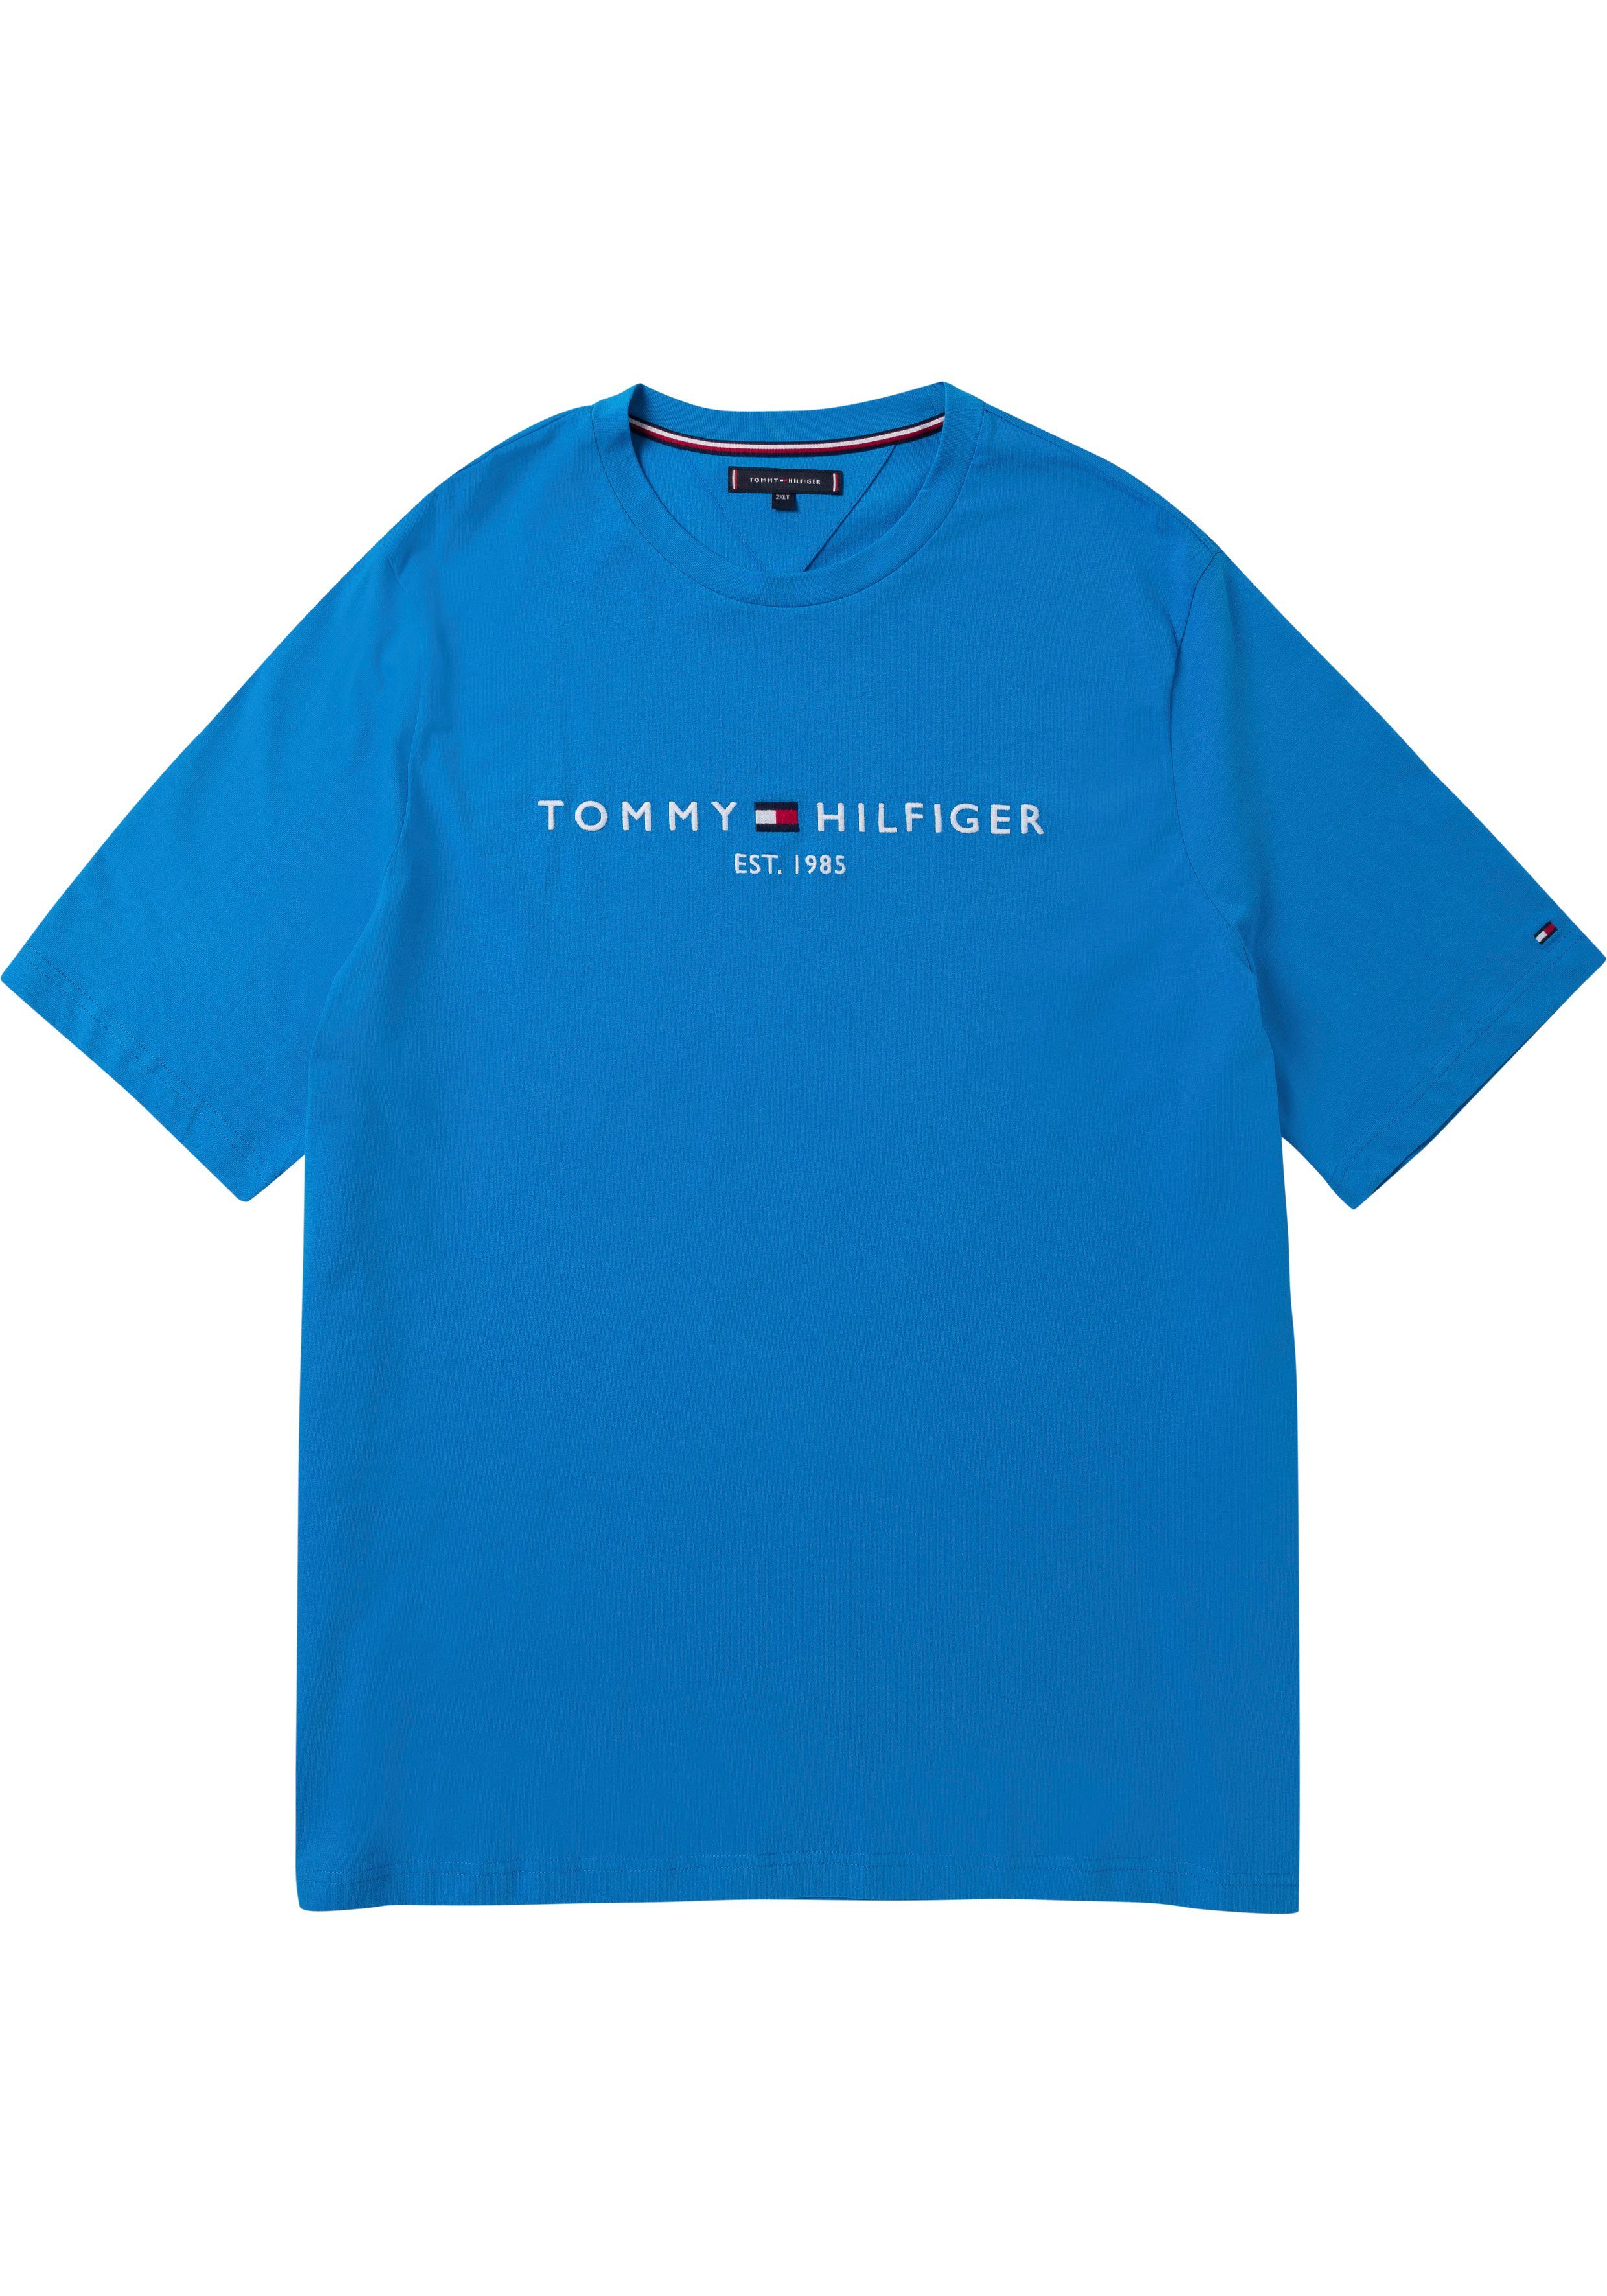 Tommy Hilfiger Big & auf LOGO Brust TEE-B Logoschriftzug der T-Shirt mit Tall BT-TOMMY Hilfiger Tommy azurblau